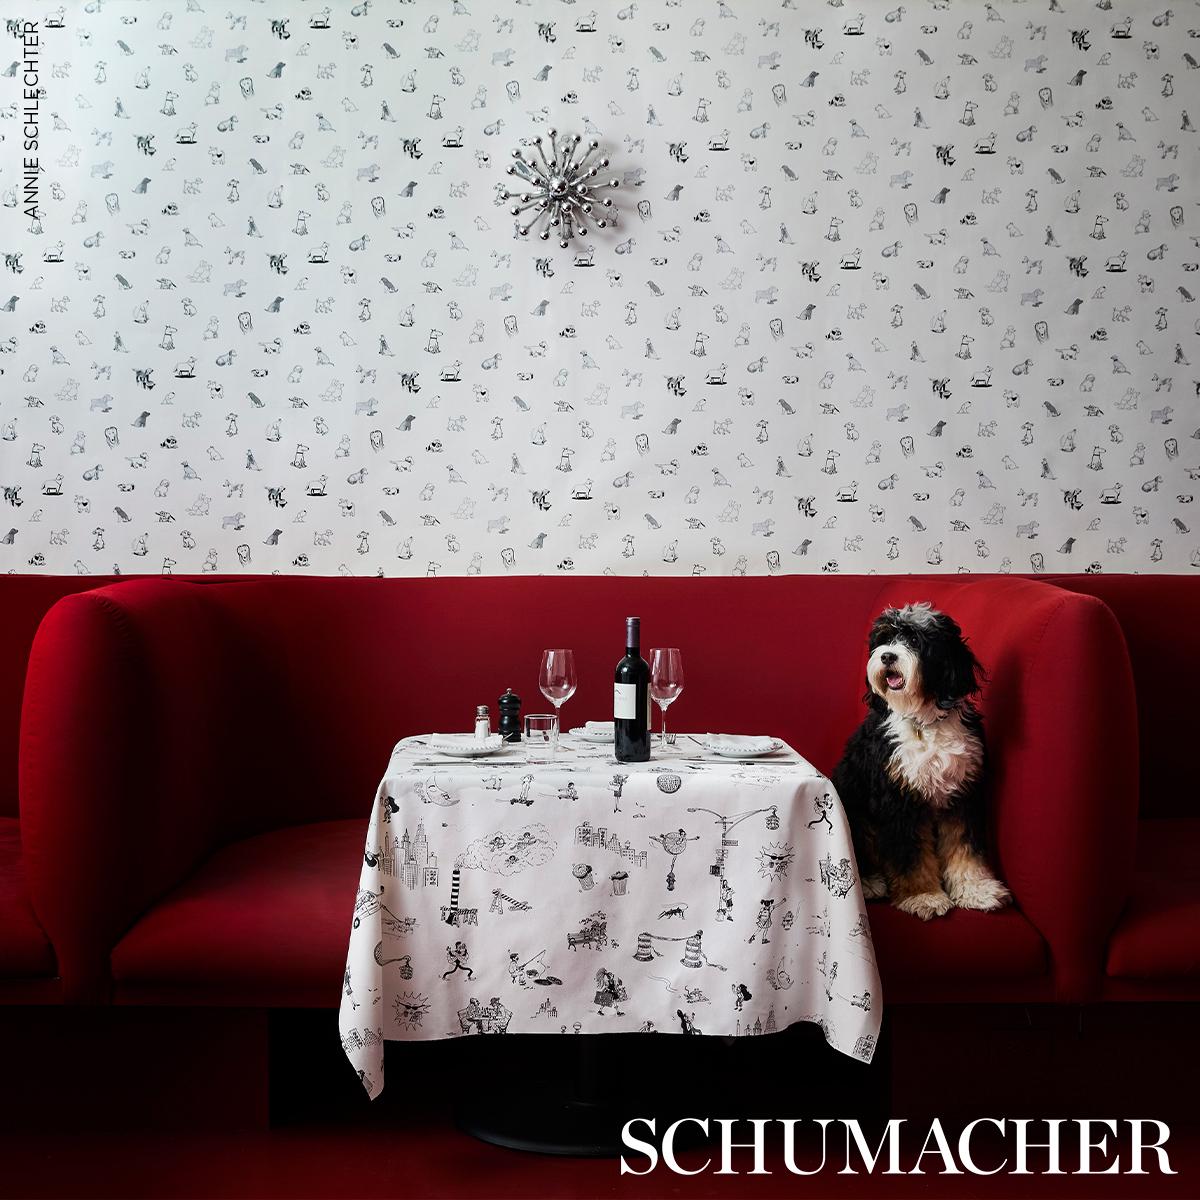 Schumacher Wallpaper 5016130 Good Dogs Everywhere in Black & White